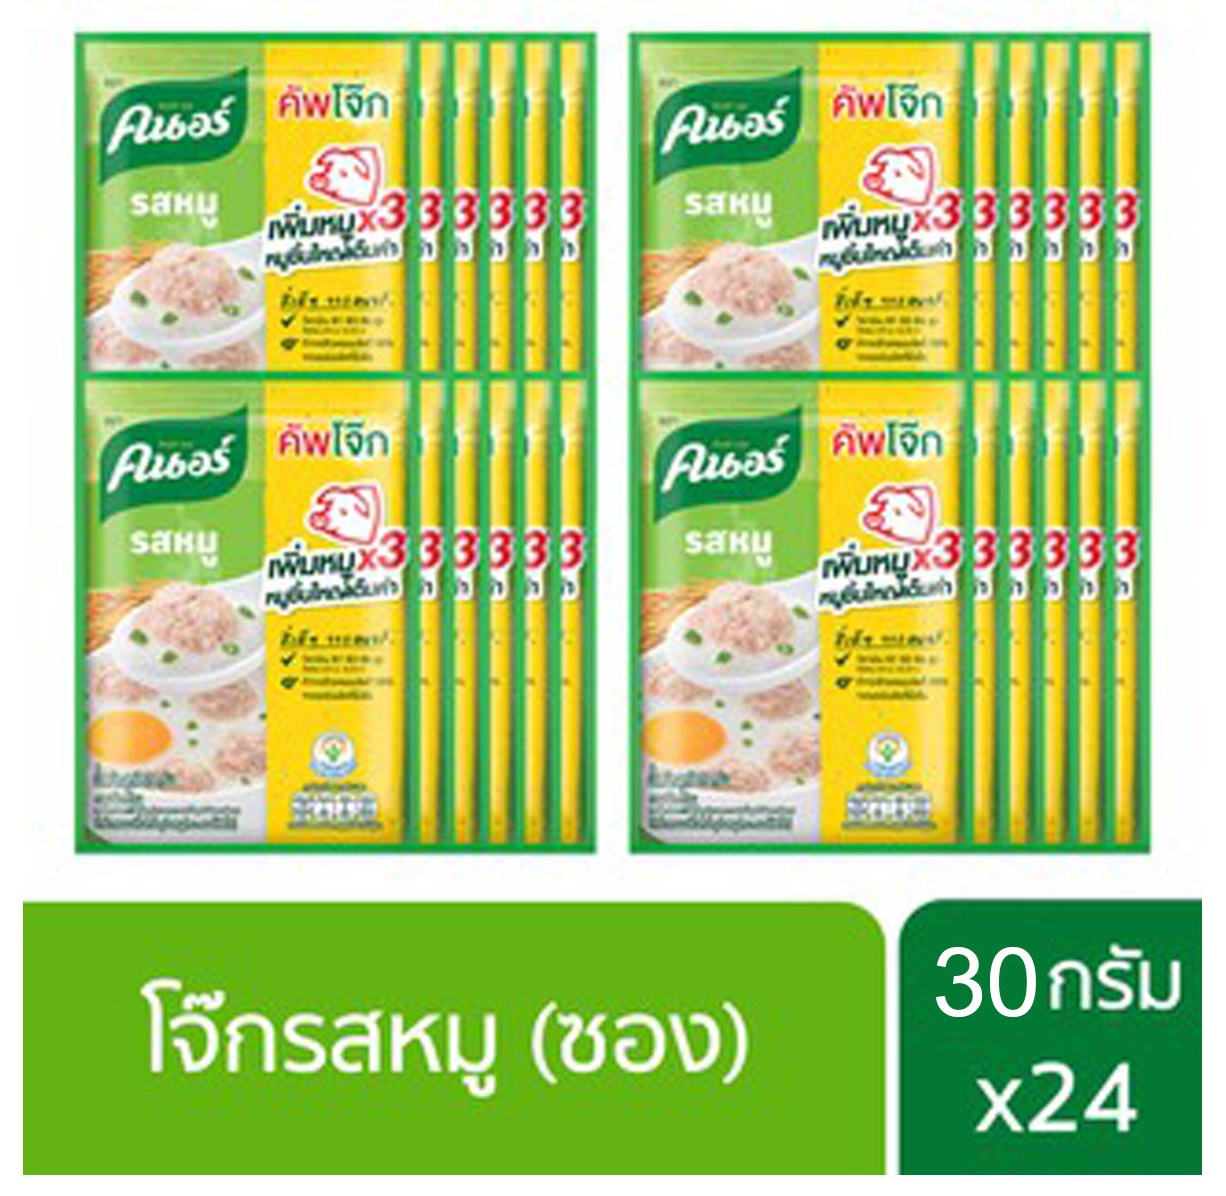 Knorr Cup Jok Sachet Pork 30 g. X24 pcs. คนอร์ คัพ โจ๊ก ชนิดซอง รสหมู 30 ก. X24 ซอง